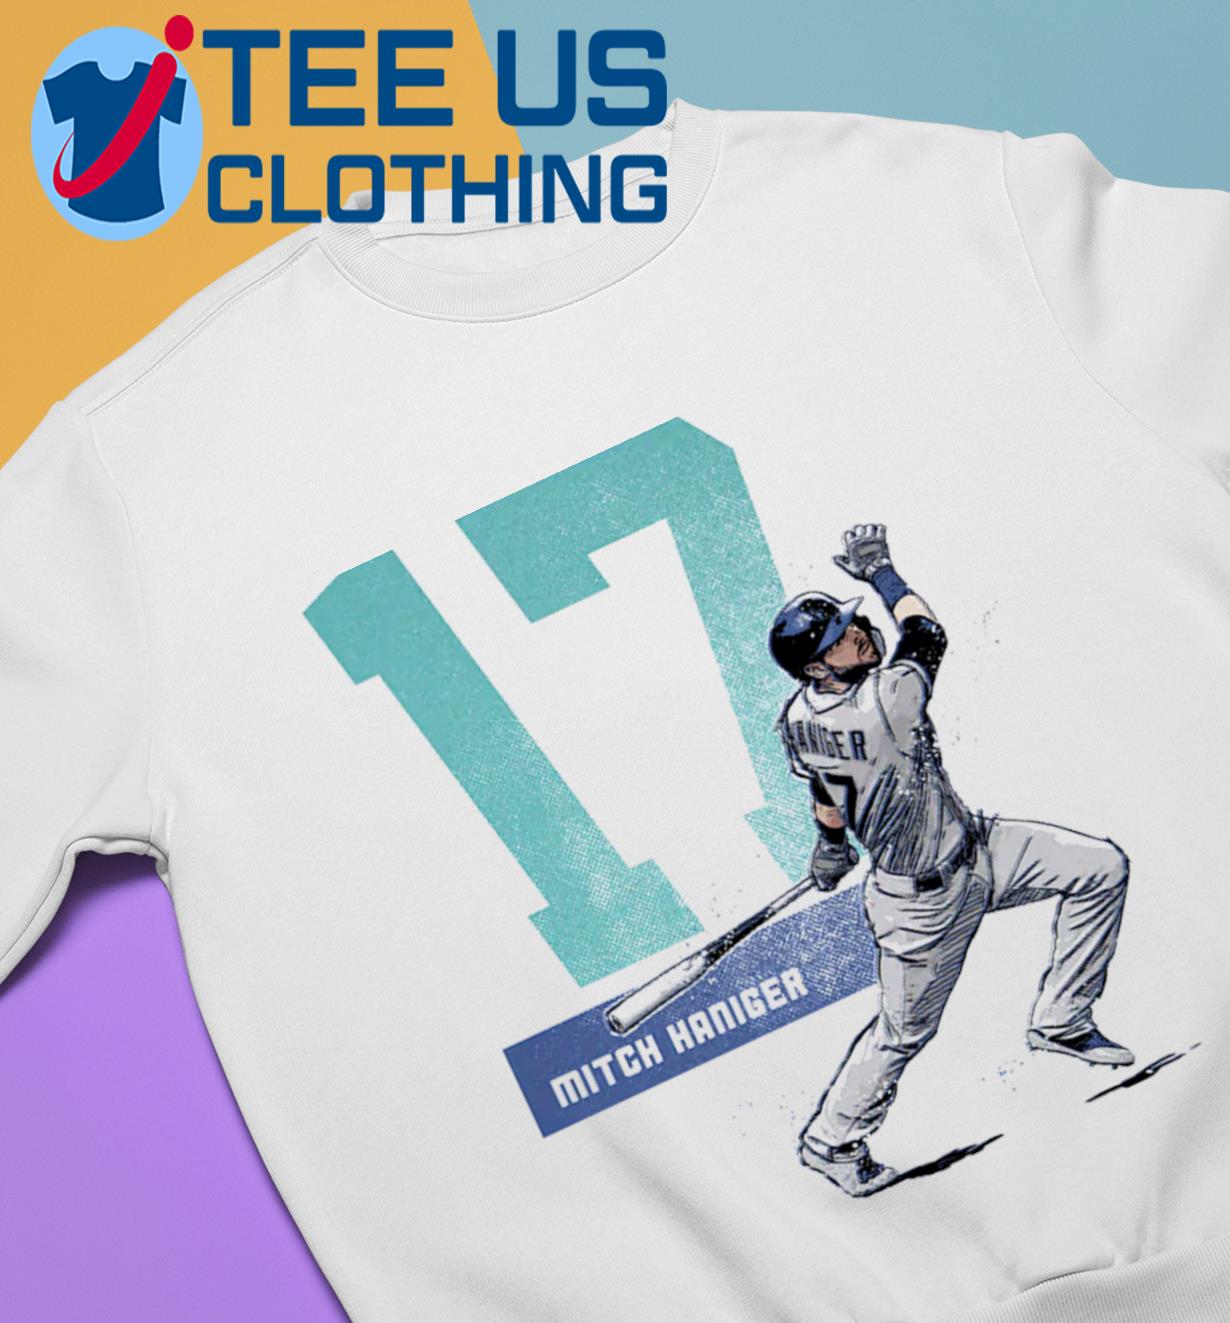 Mitch Haniger Grunge Seattle Baseball 2023 shirt, hoodie, sweater